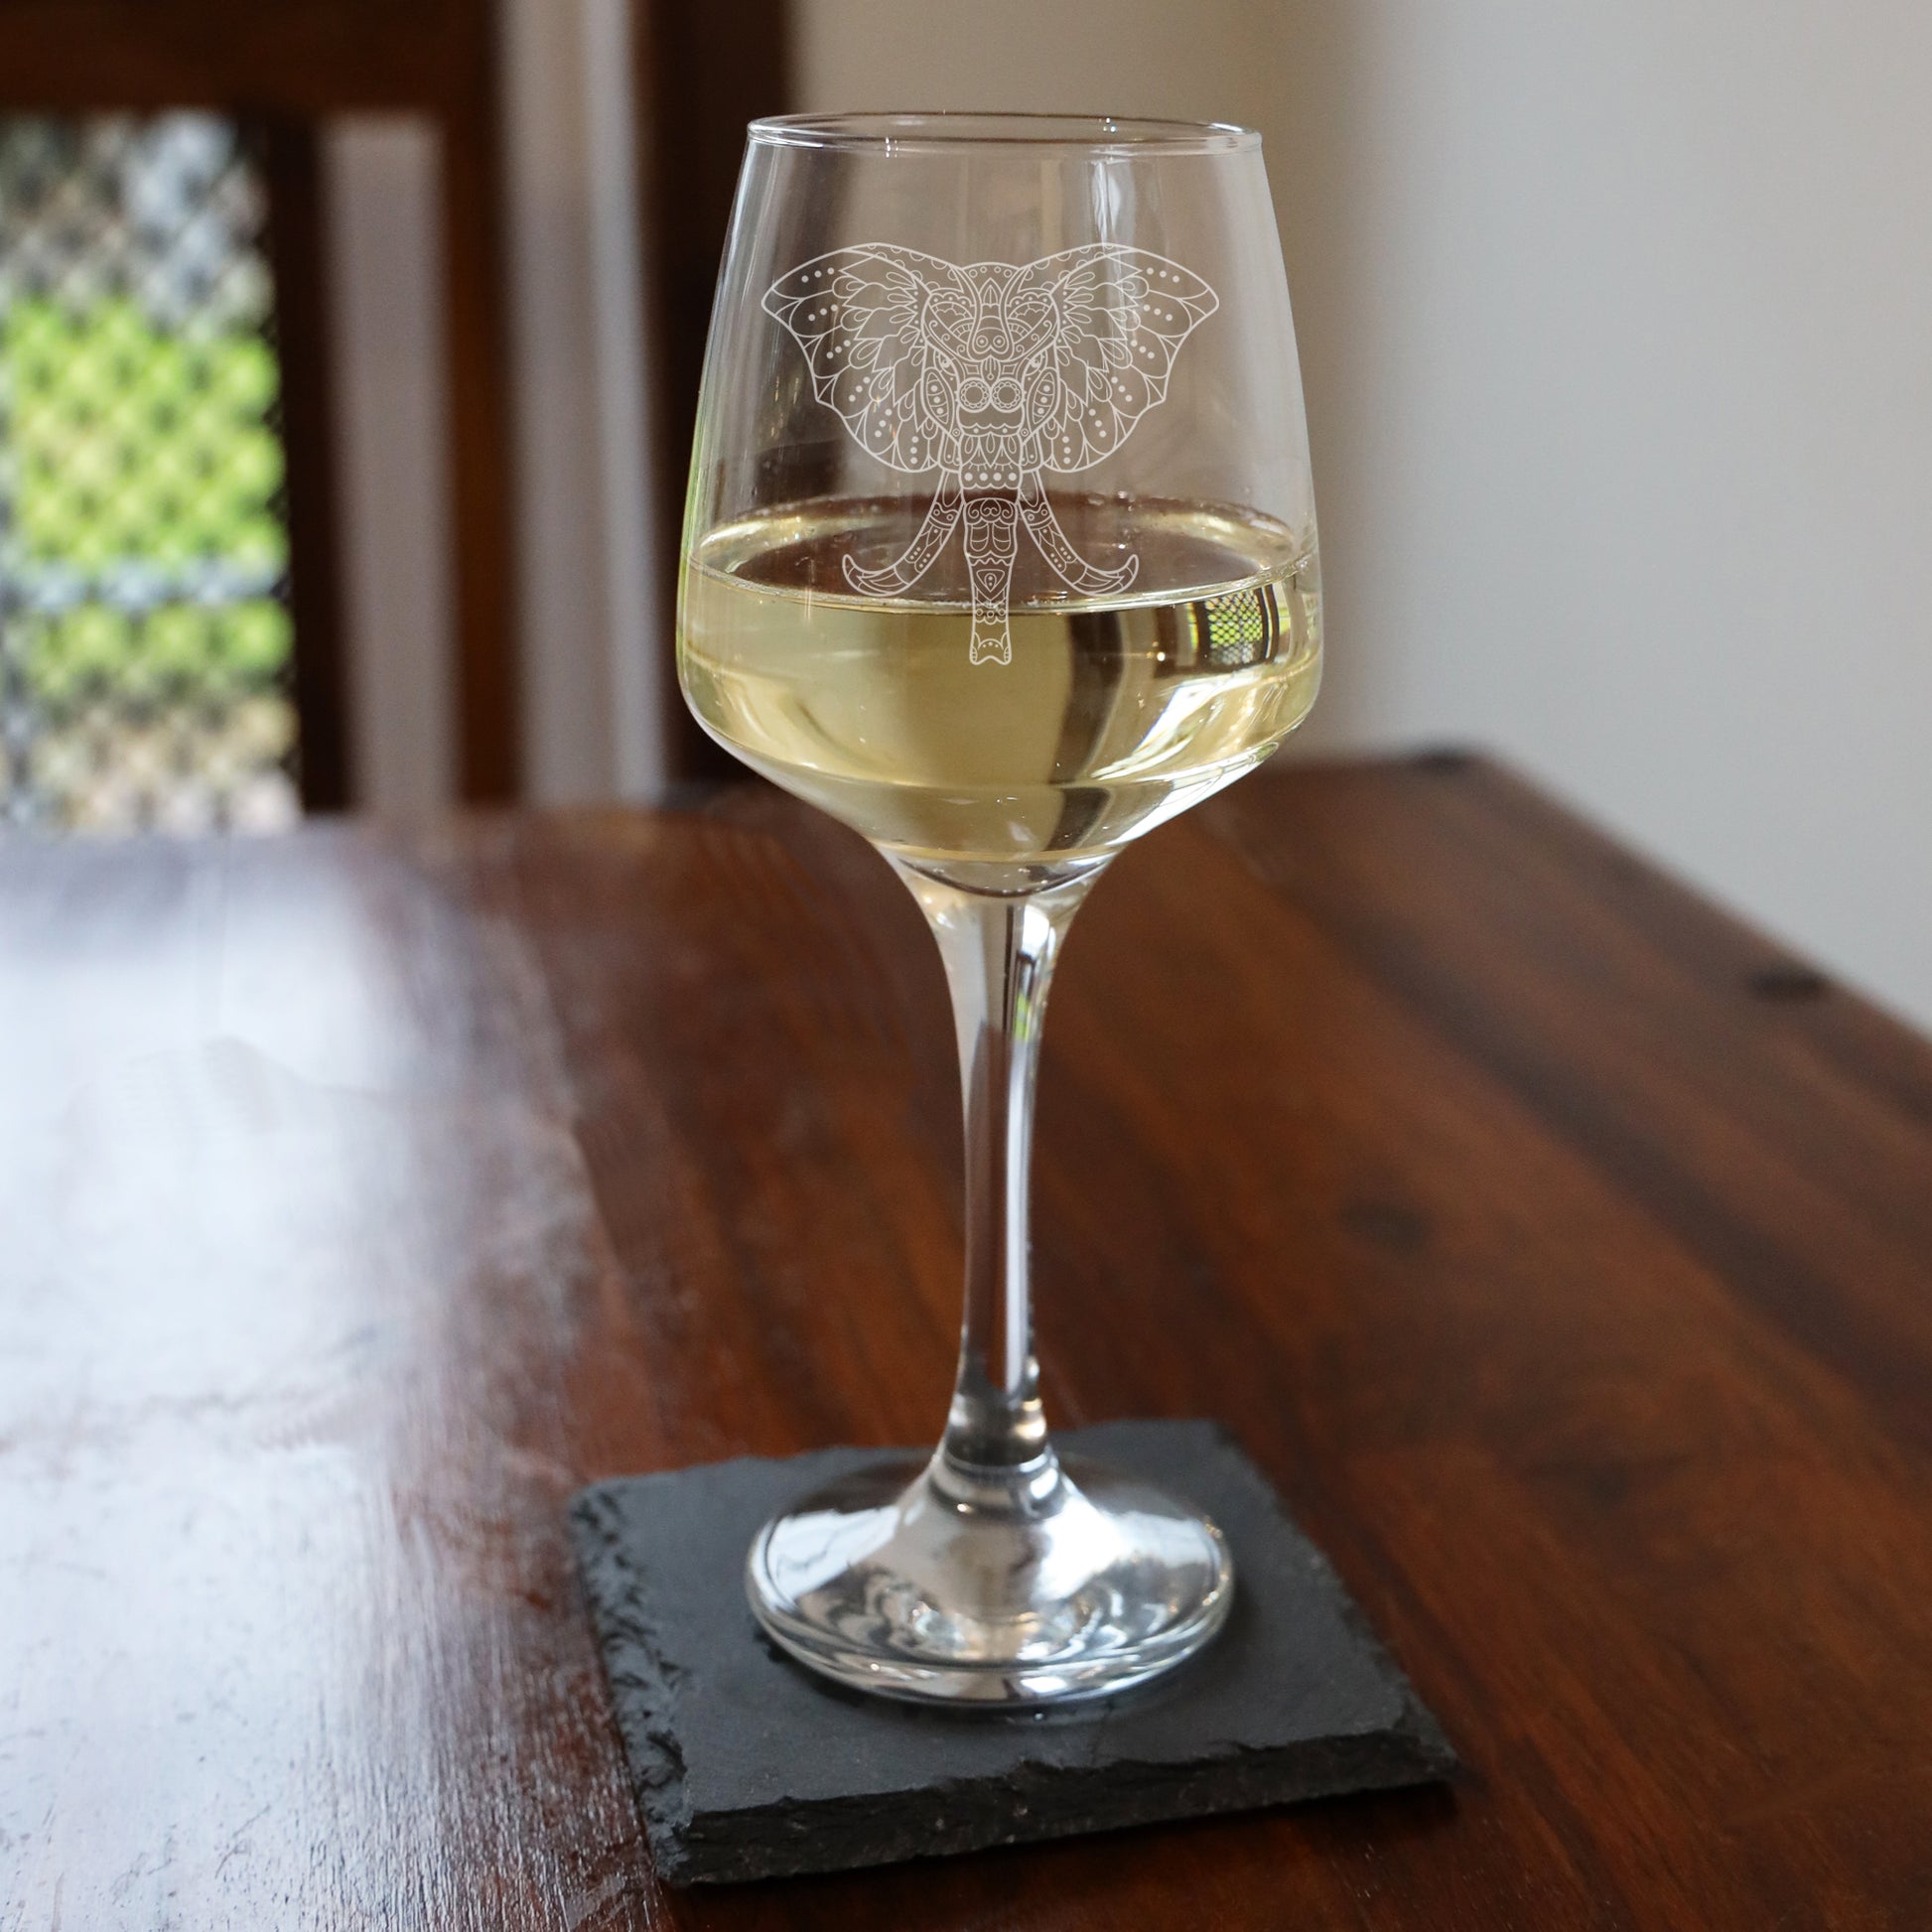 Engraved Elephant Mandala Wine Glass and/or Coaster Set  - Always Looking Good -   